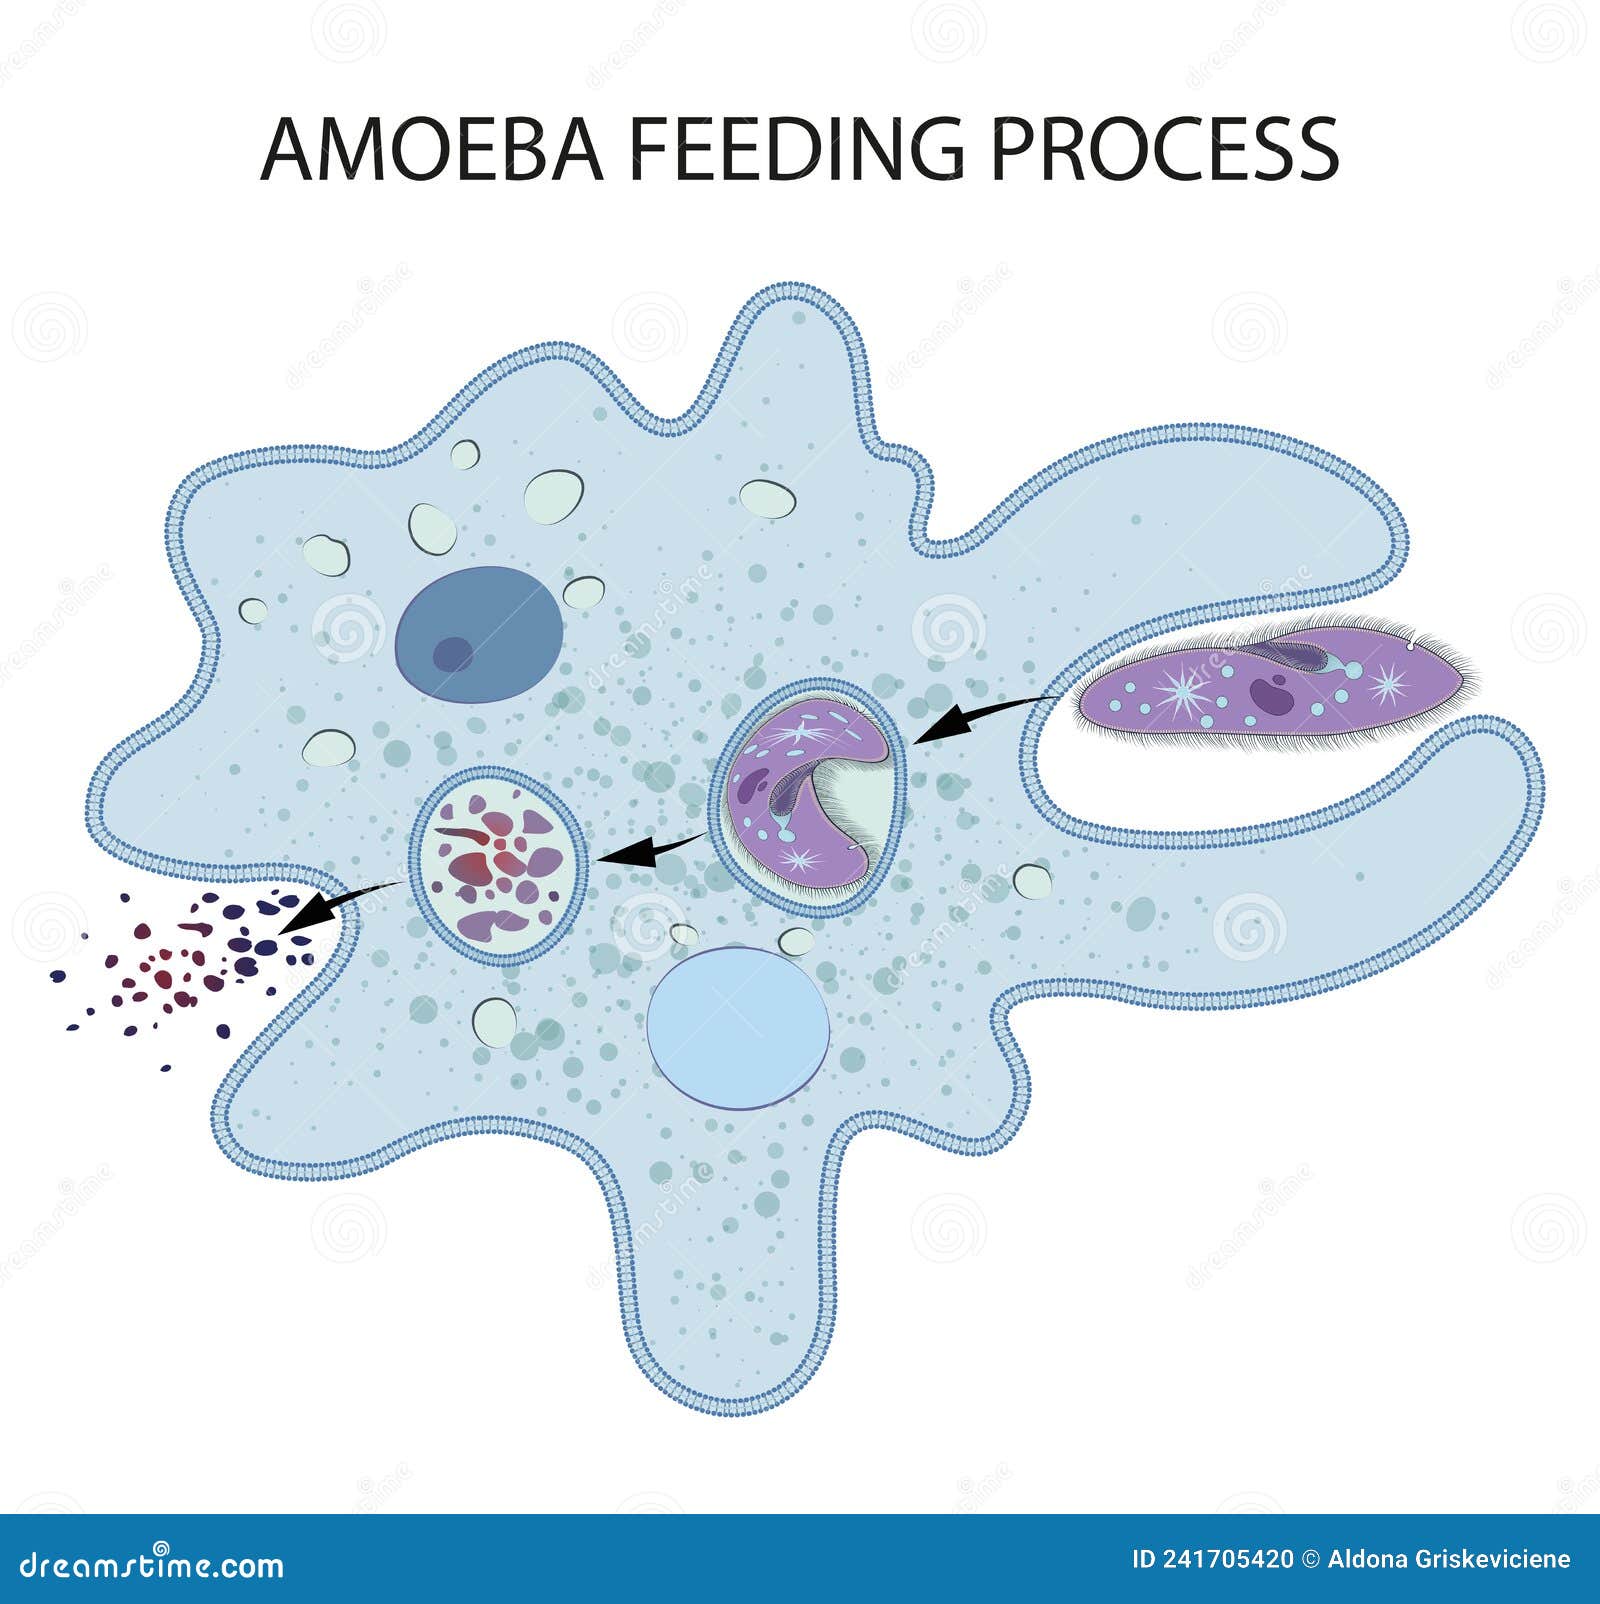 feeding and digestion in amoeba